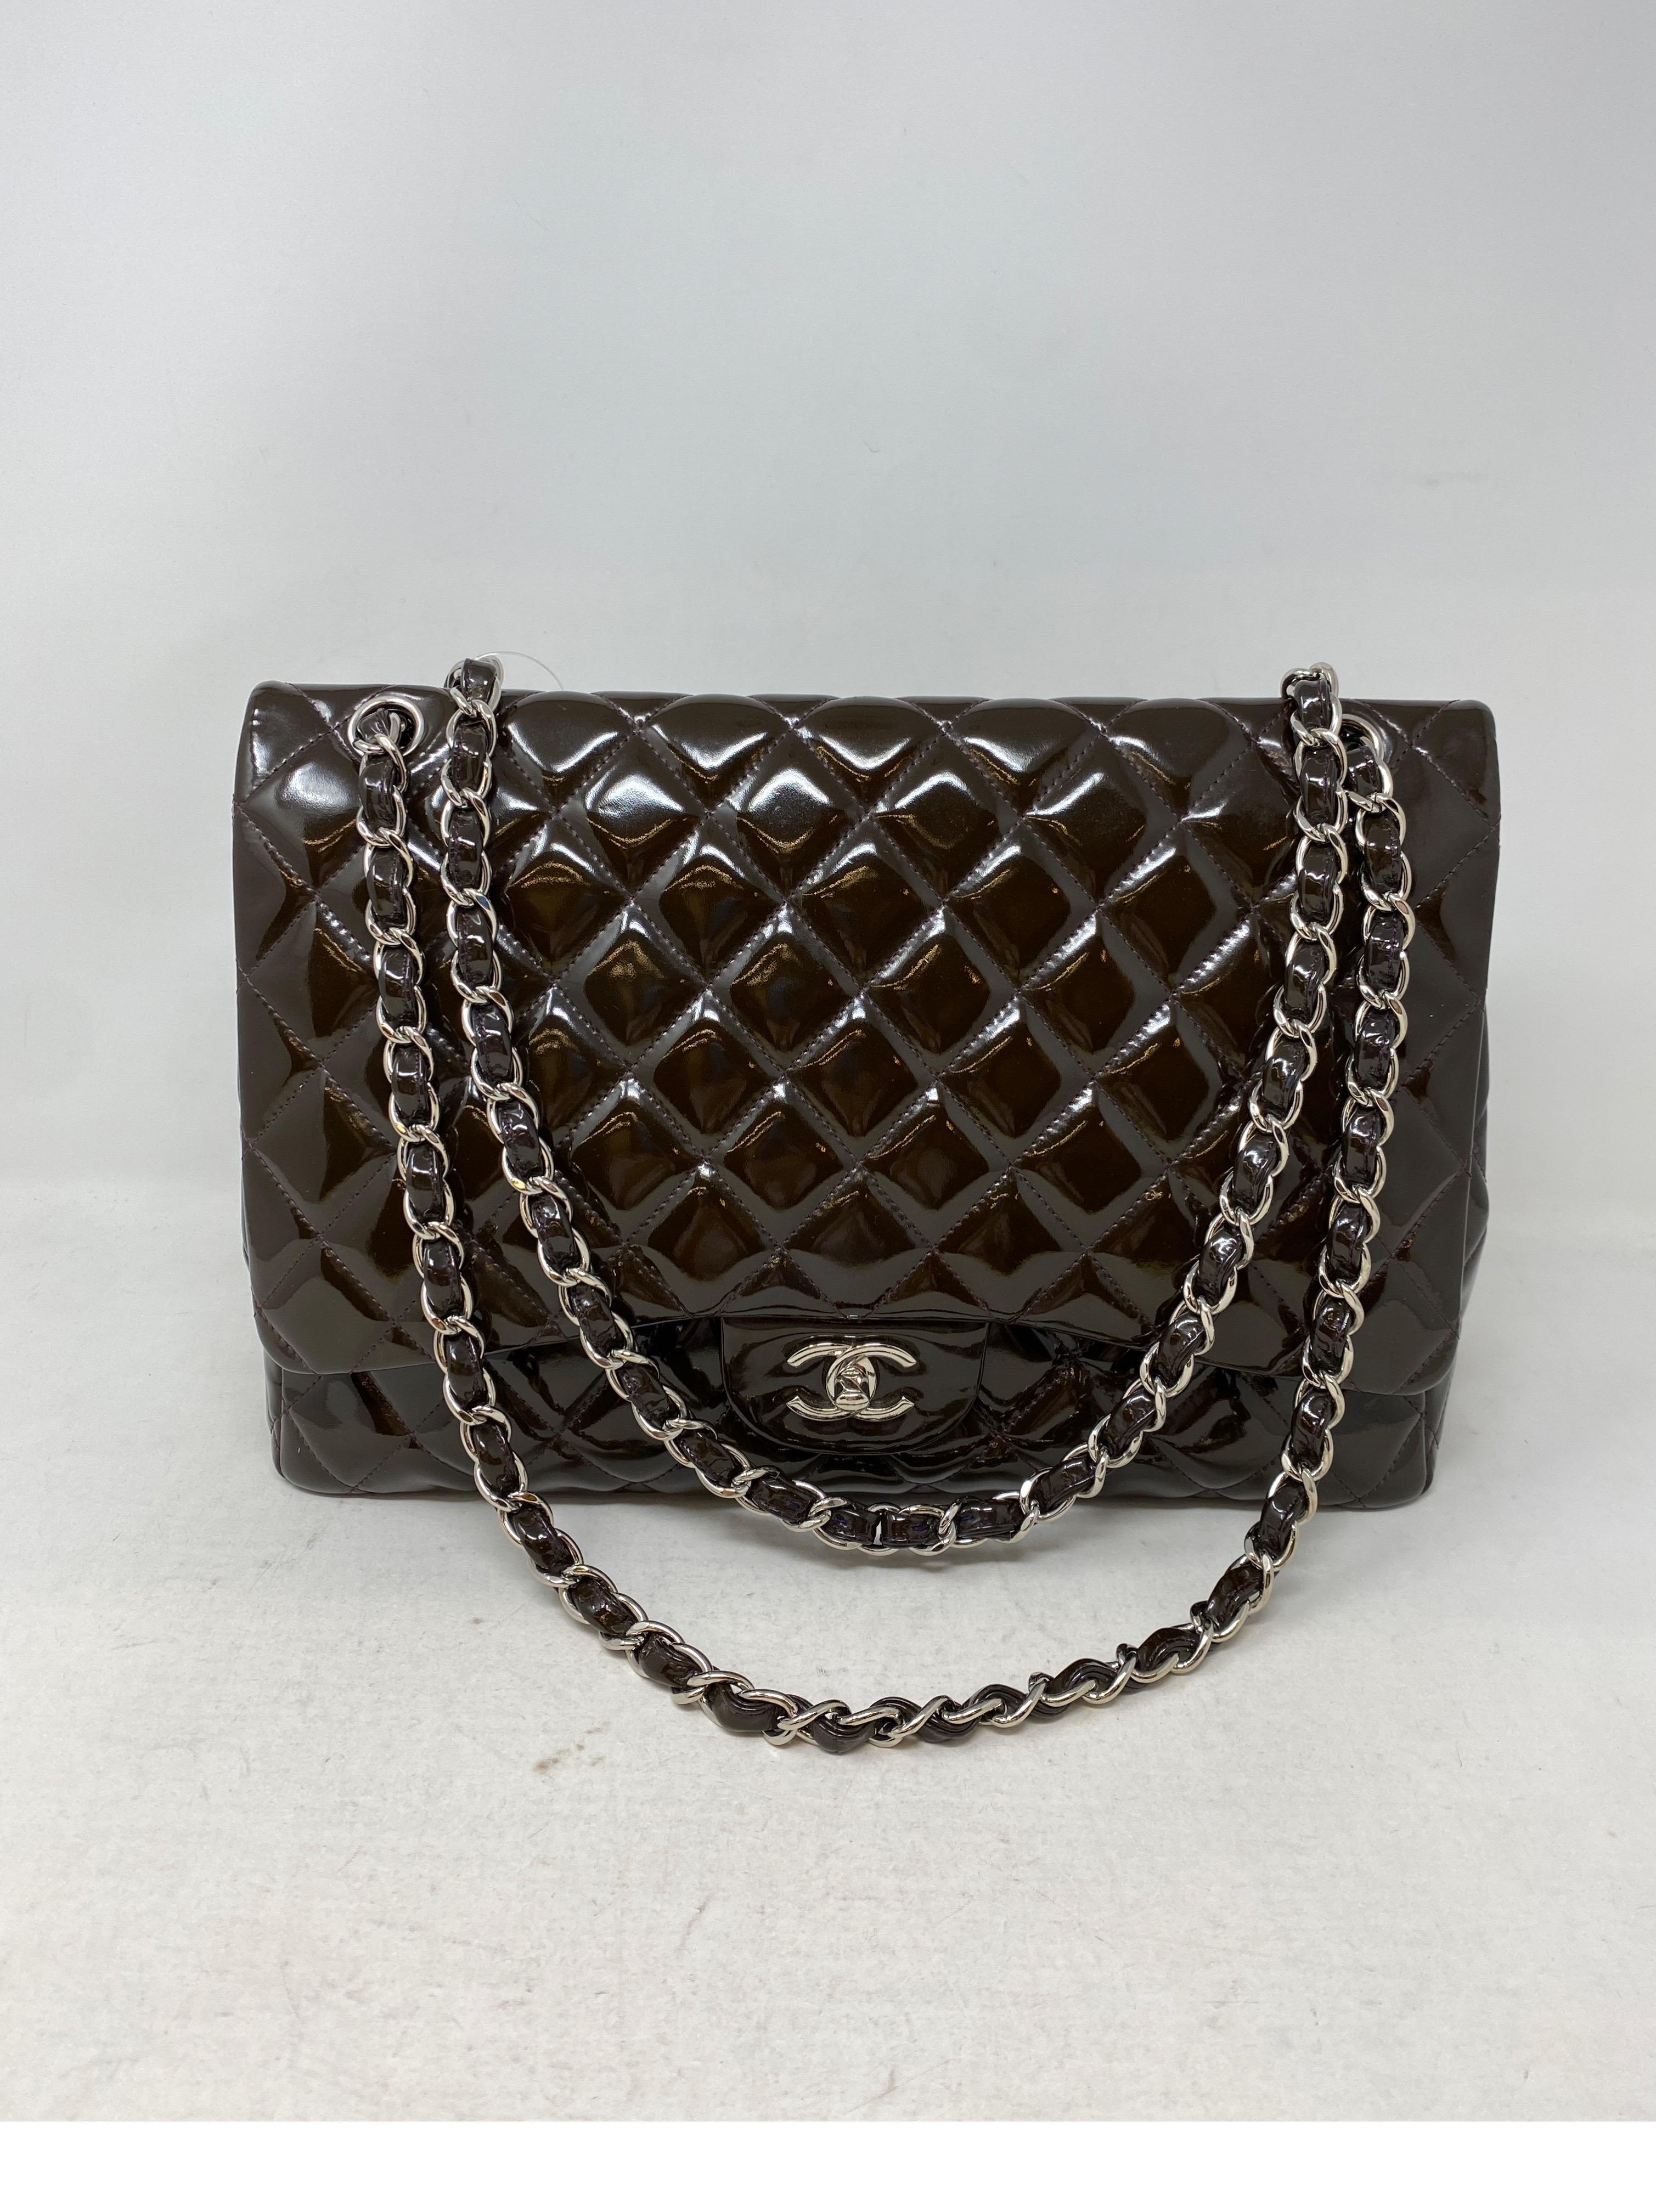 Chanel Jumbo Patent Leather Brown Bag  1